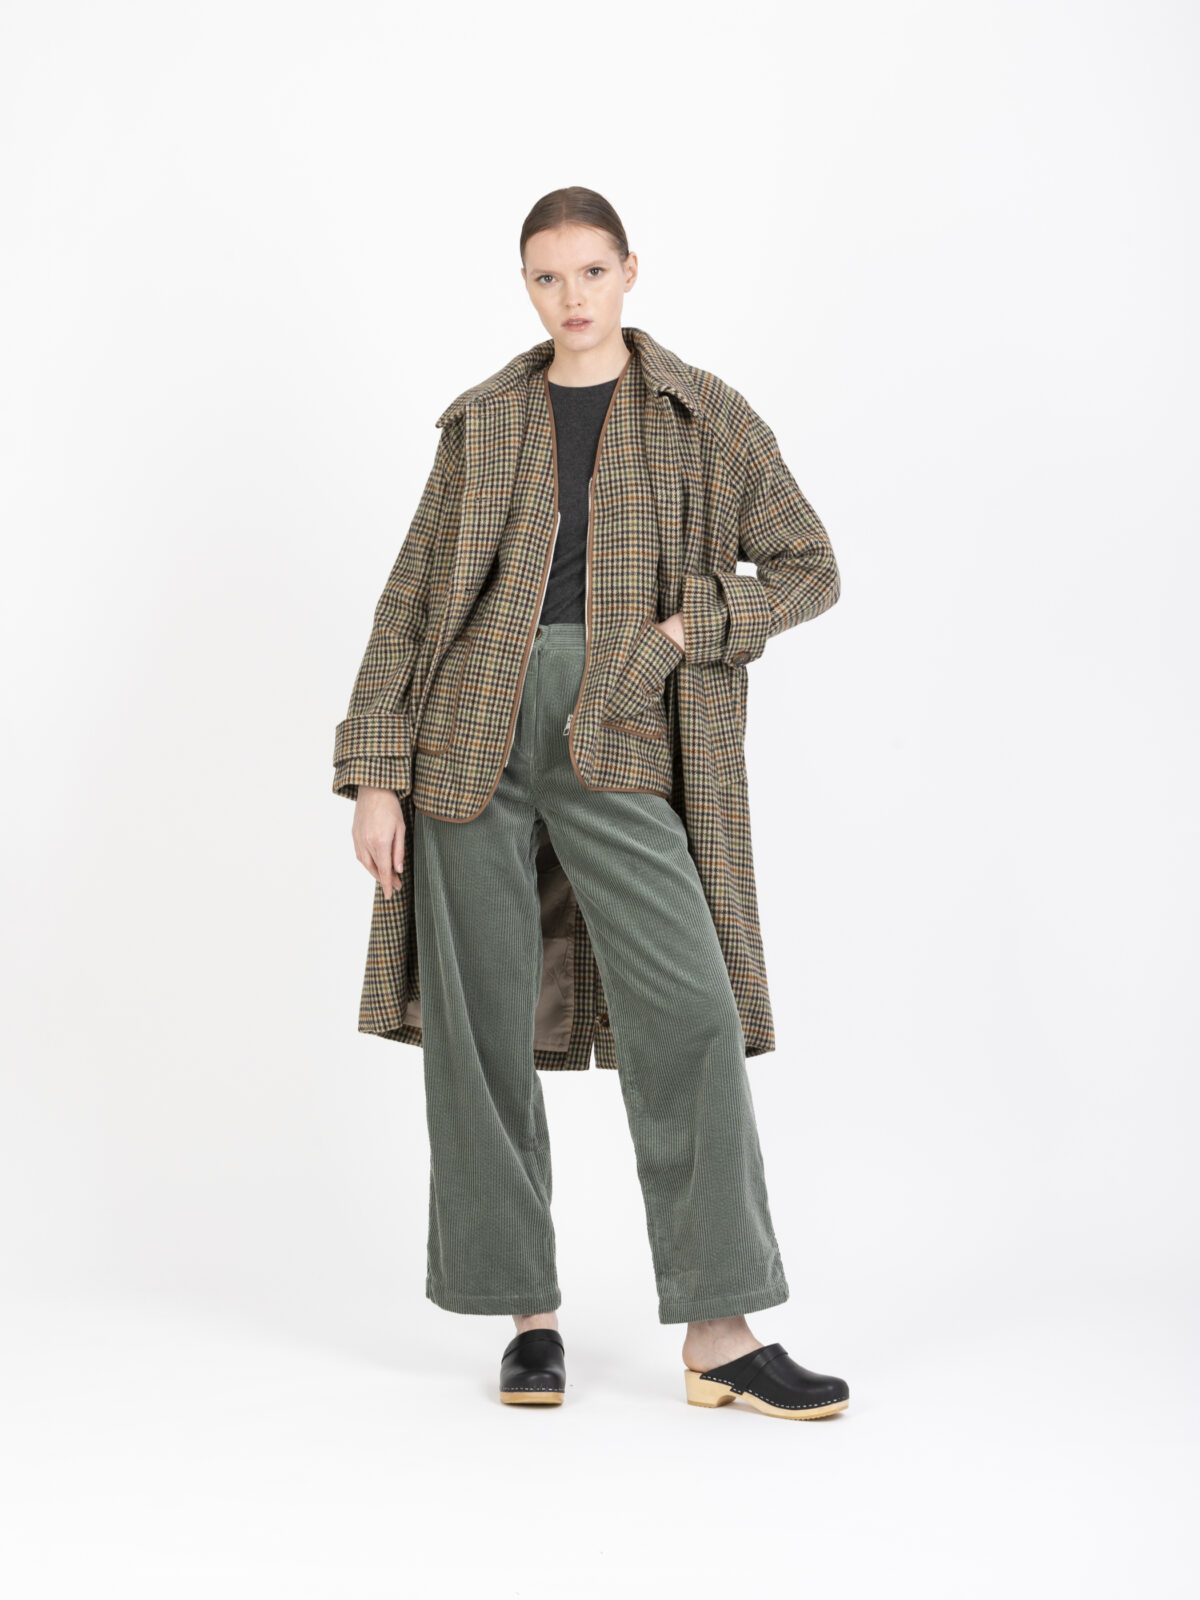 evan-checked-wool-long-coat-vest-removable-sauncoo-matchboxathens